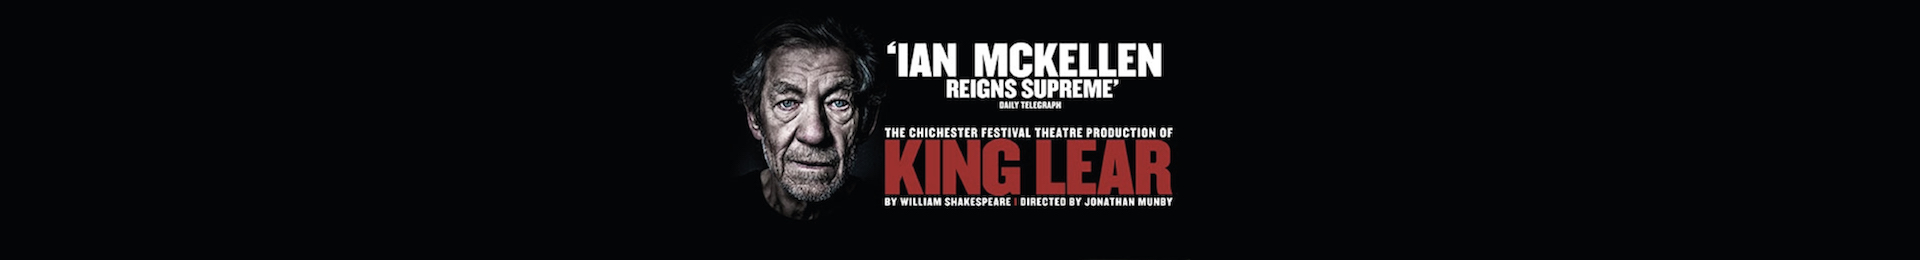 King Lear banner image